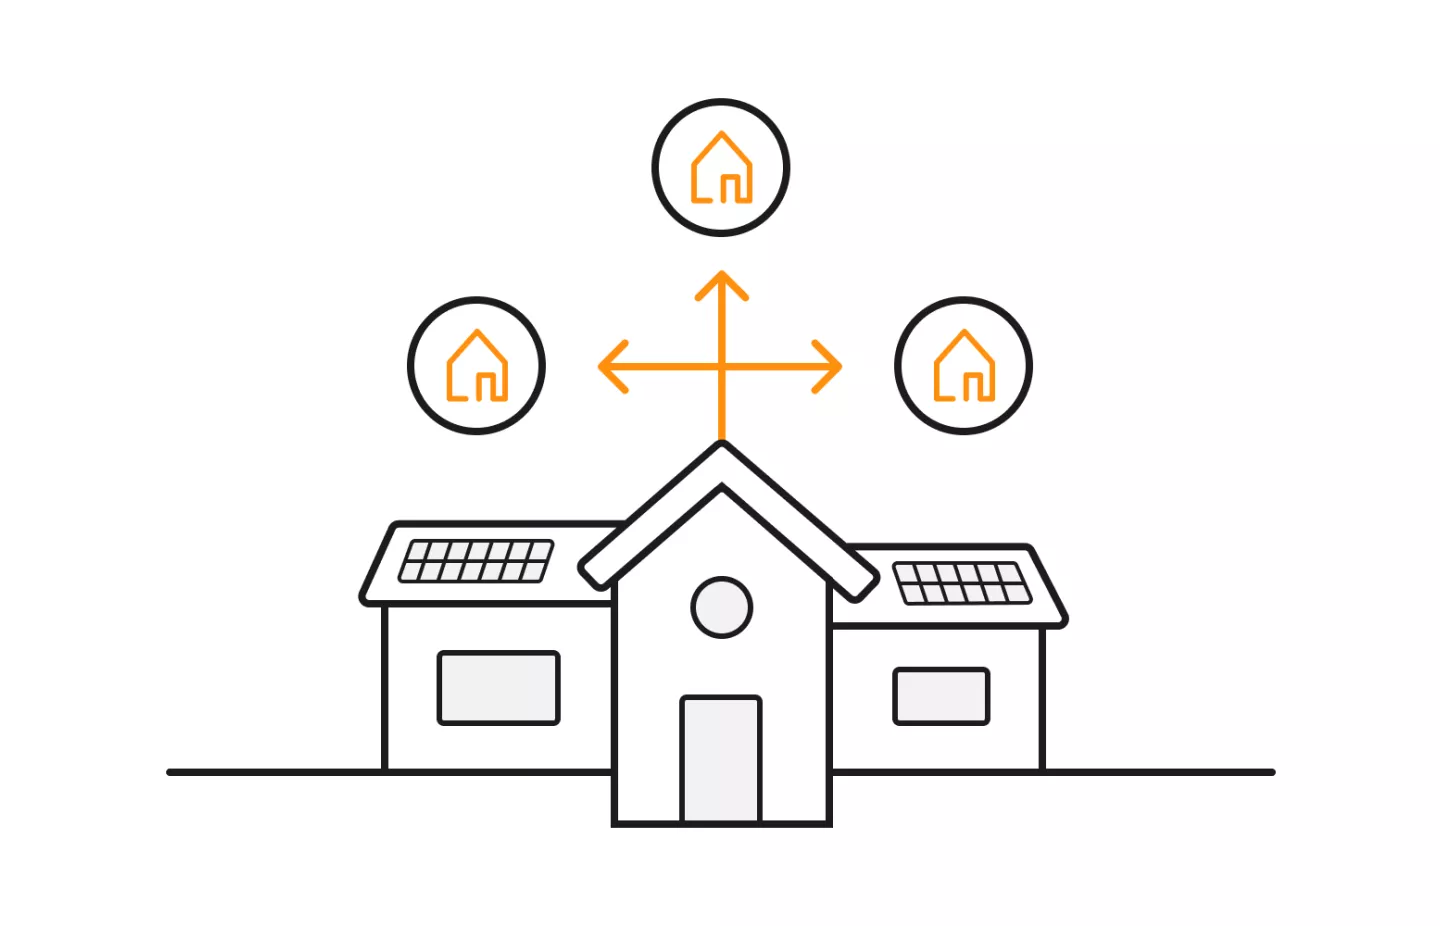 Energia prodotta da una casa e distribuita in altre case tramite SENEC.Cloud